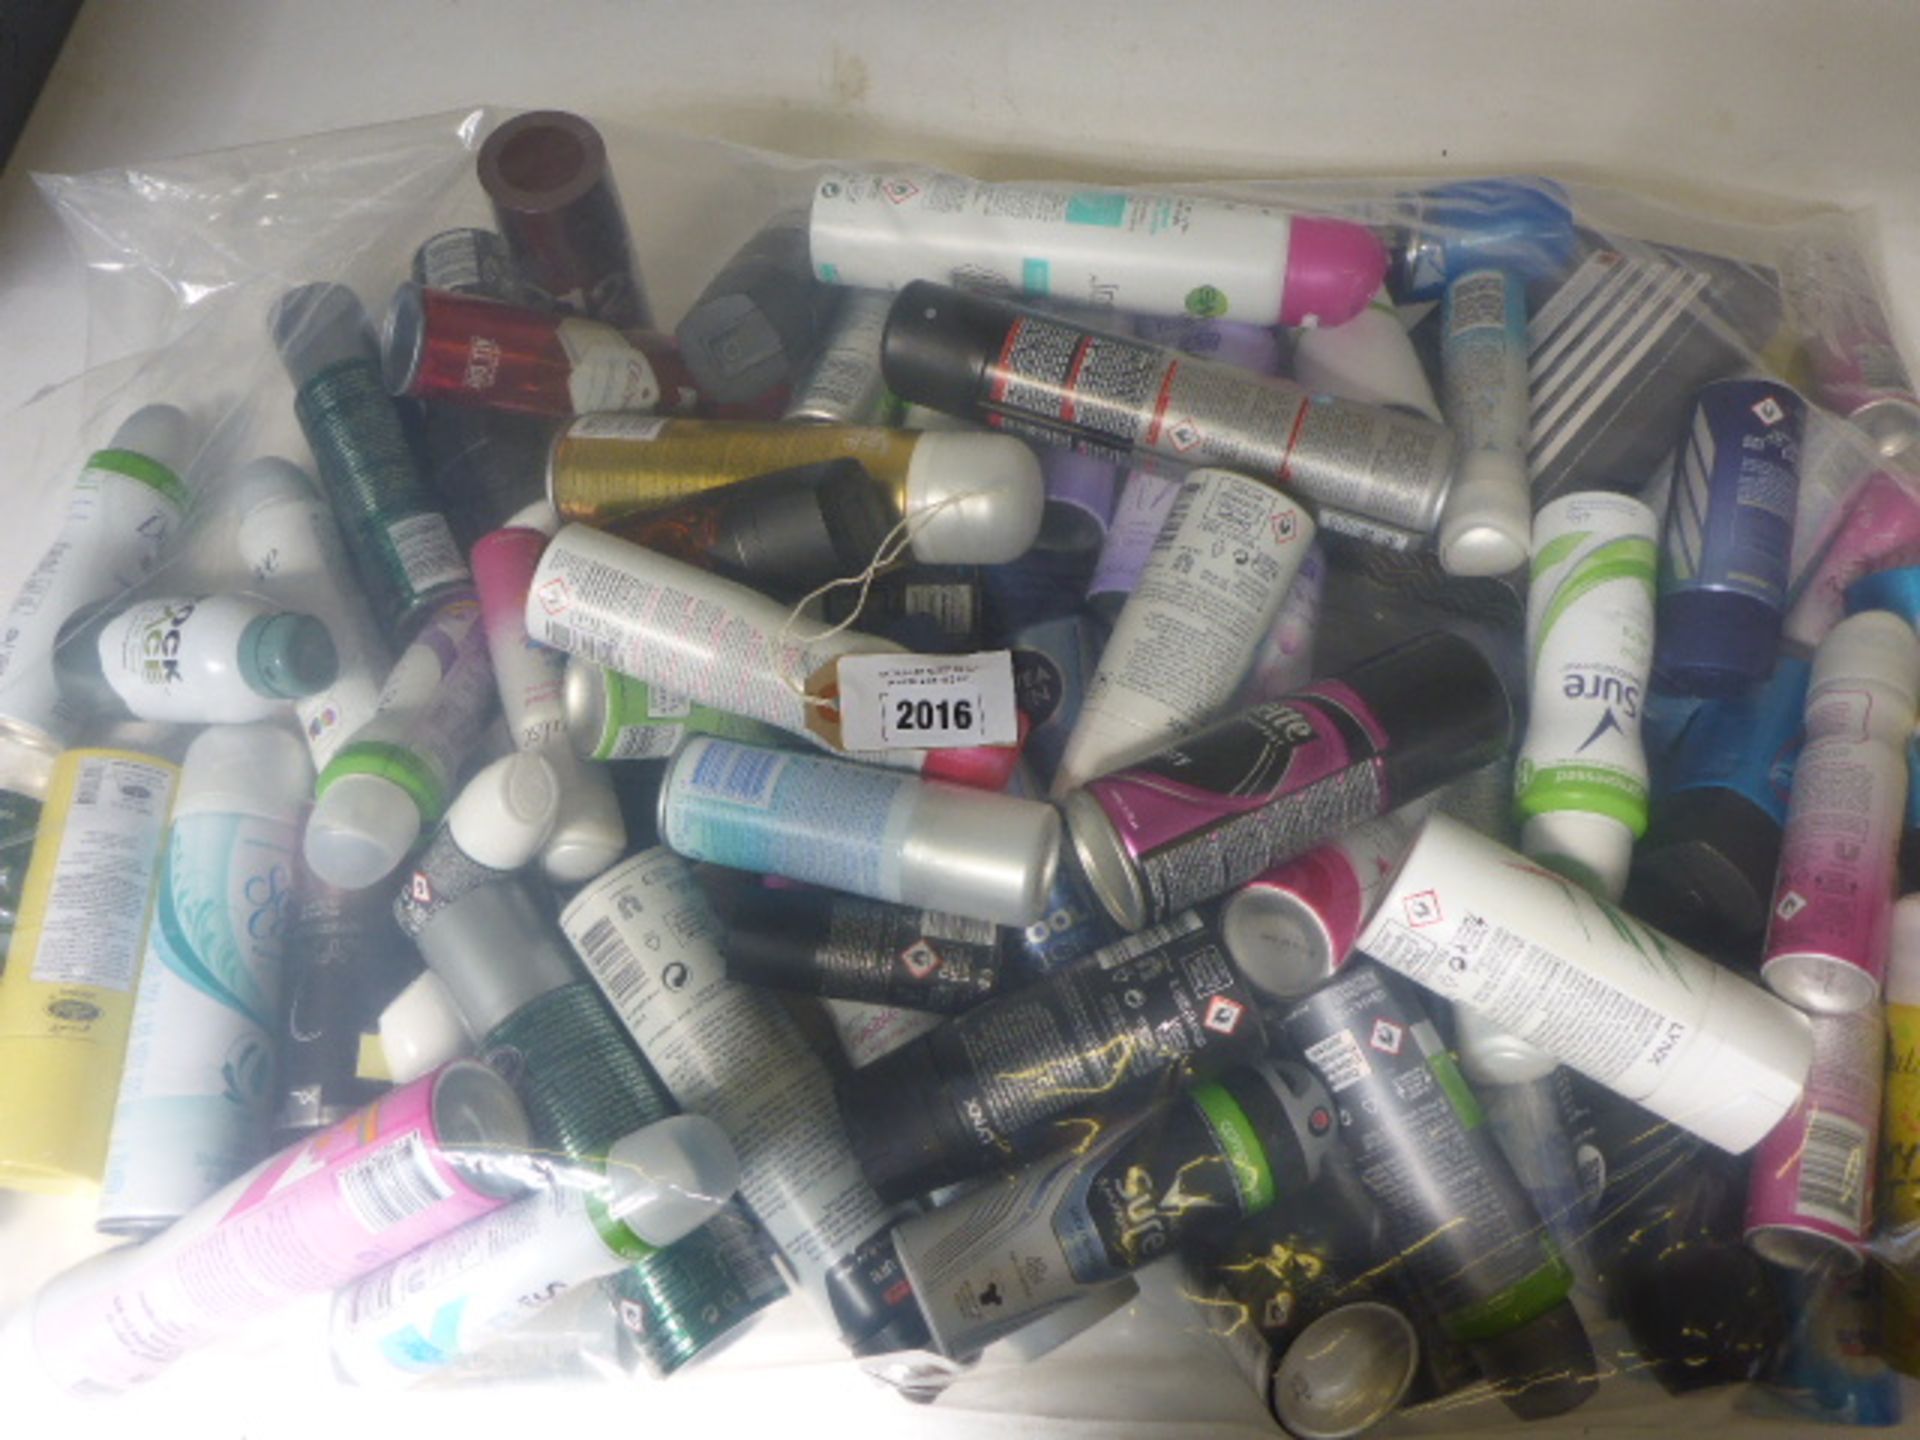 Quantity of aerosol deodorants, anti perspirants, body sprays etc